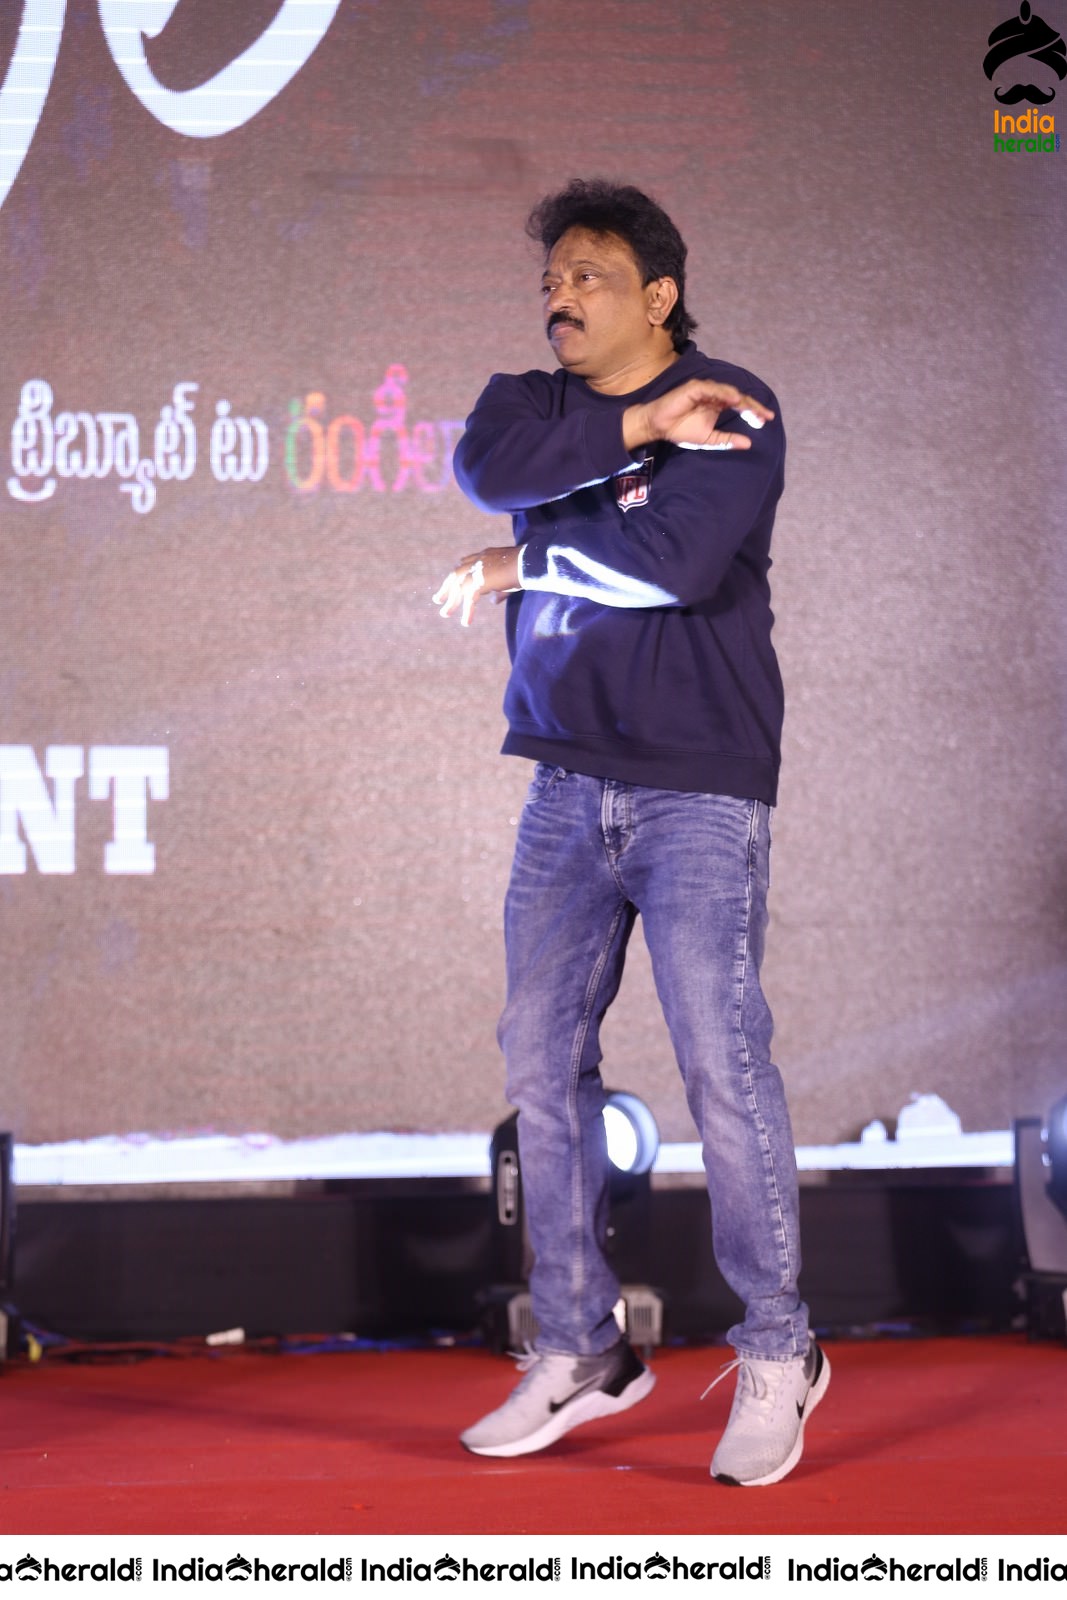 Director Ram Gopal Varma Funny Dance On the Stage Set 2